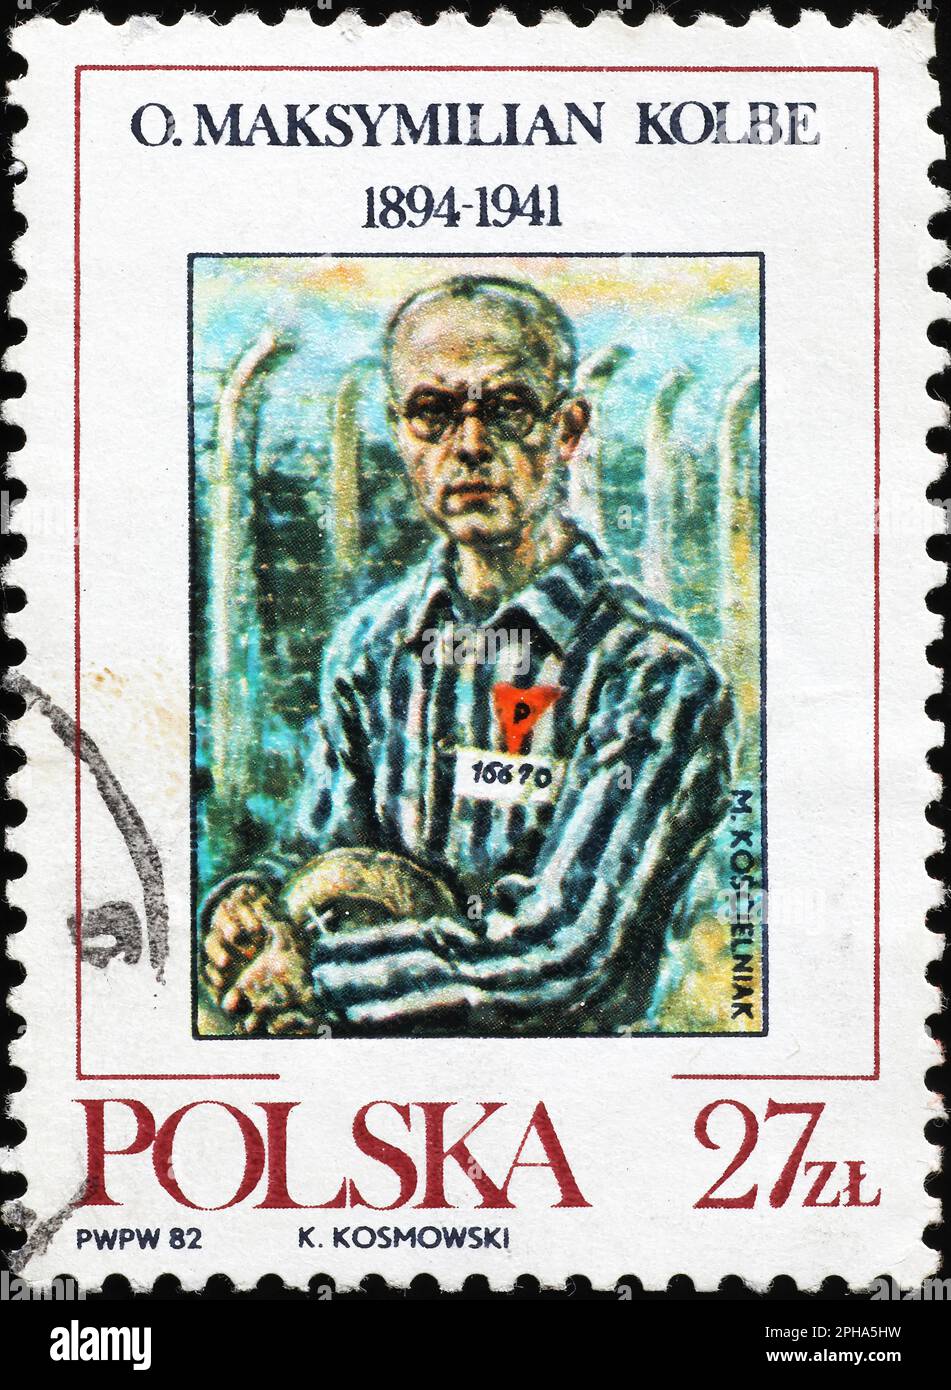 Maksymilian Kolbe on polish postage stamp Stock Photo